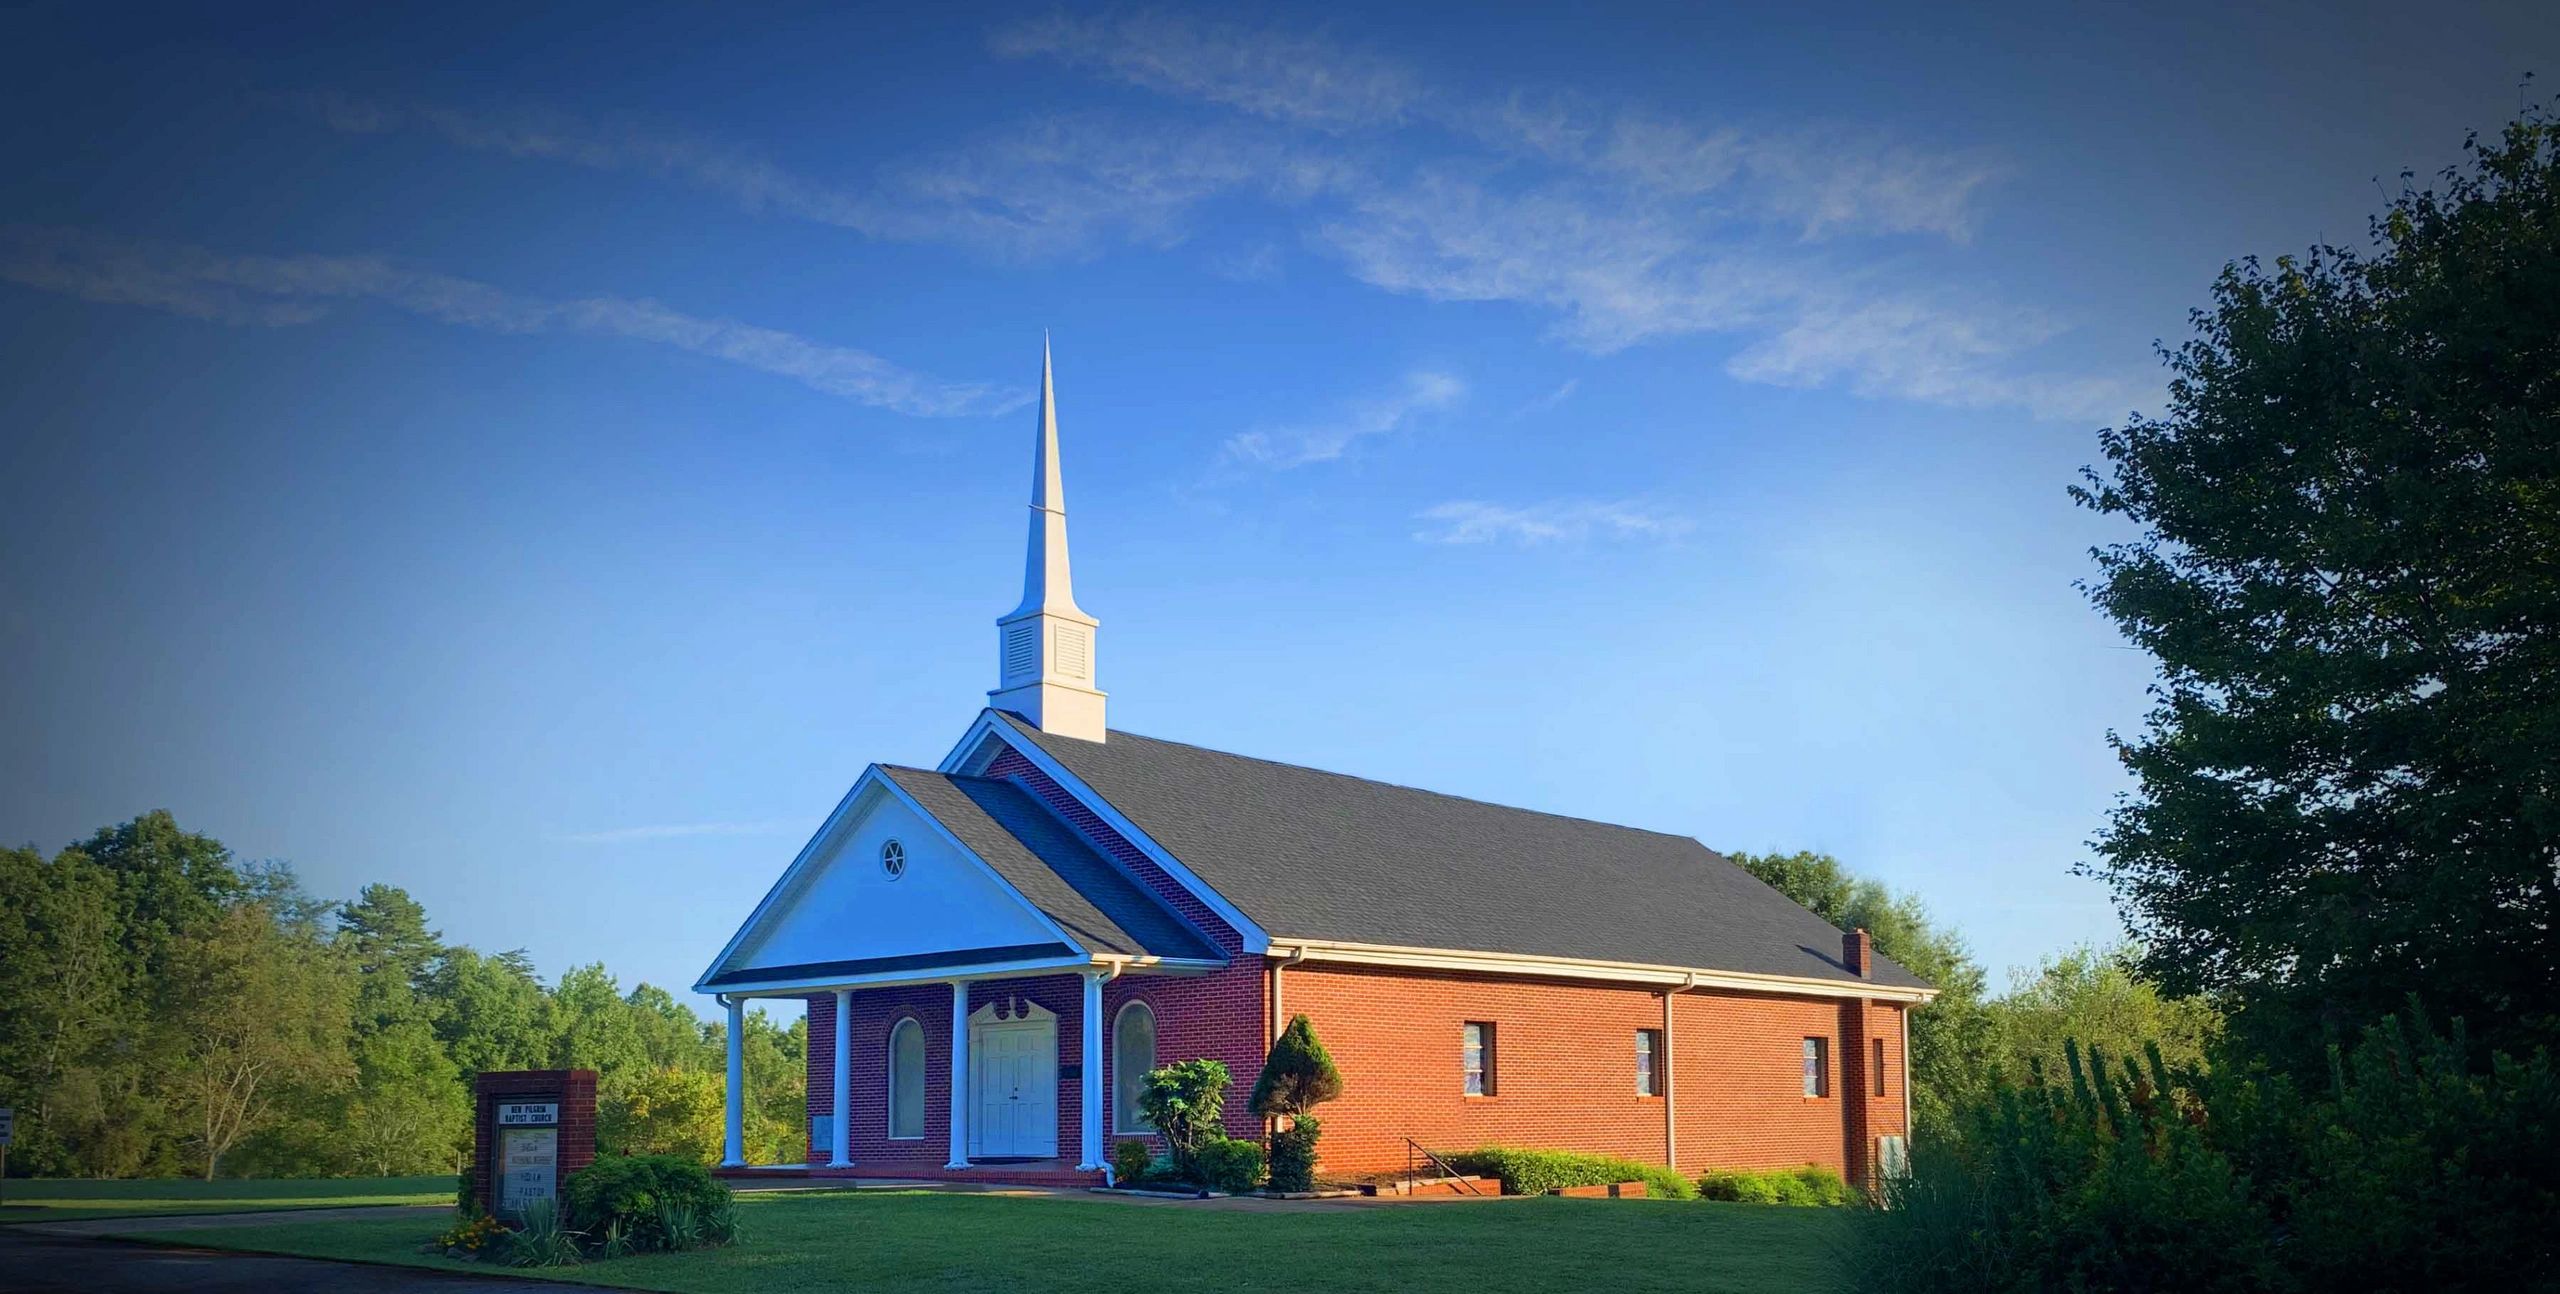 Giving Help  Pilgrim Baptist Church